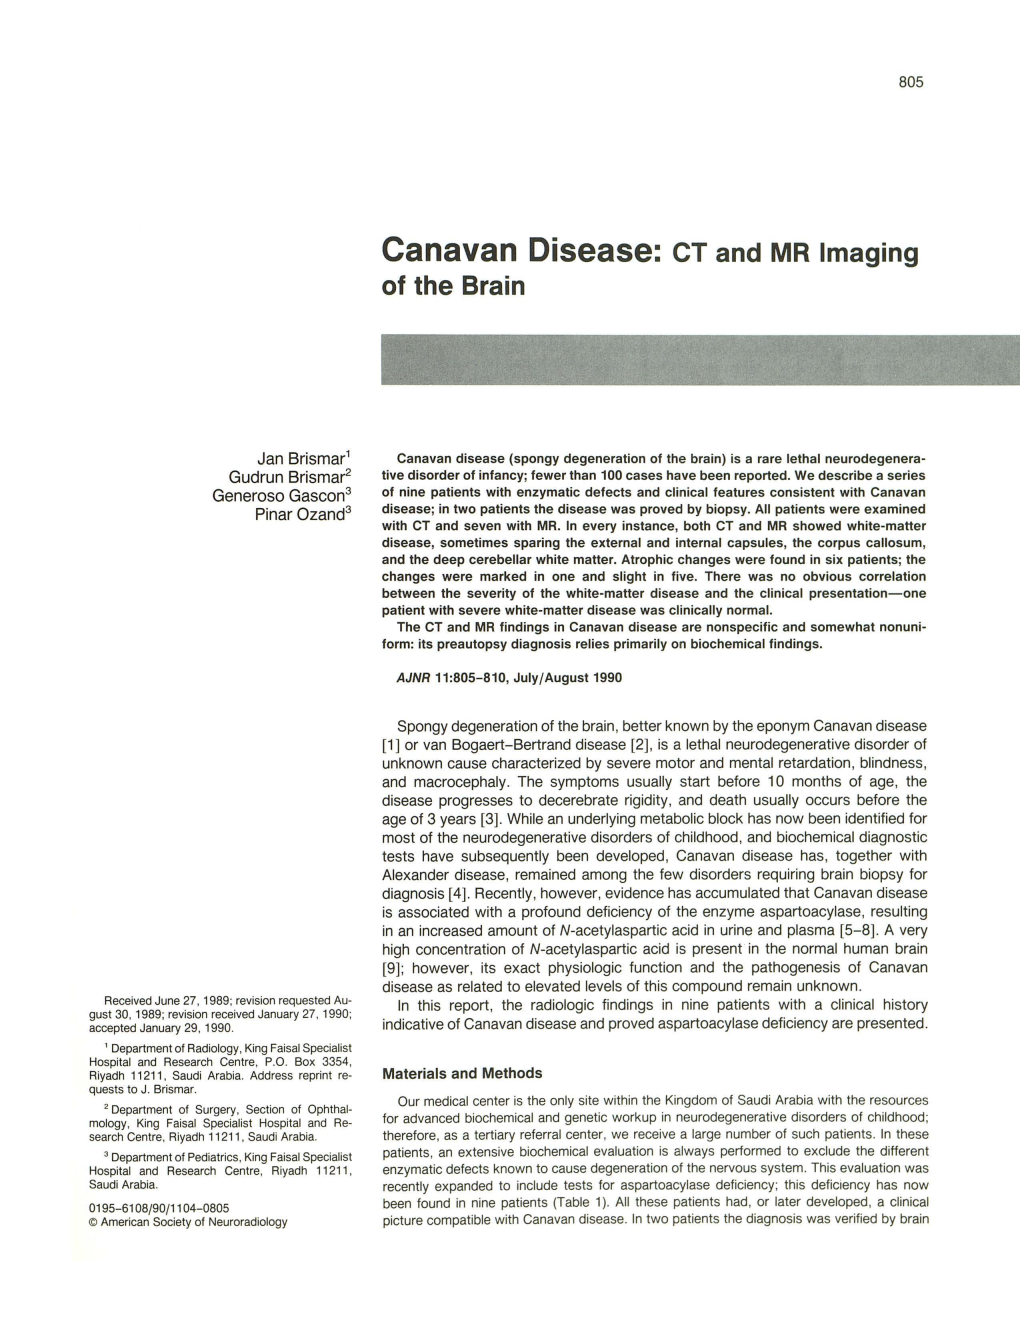 Canavan Disease: CT and MR Imaging of the Brain